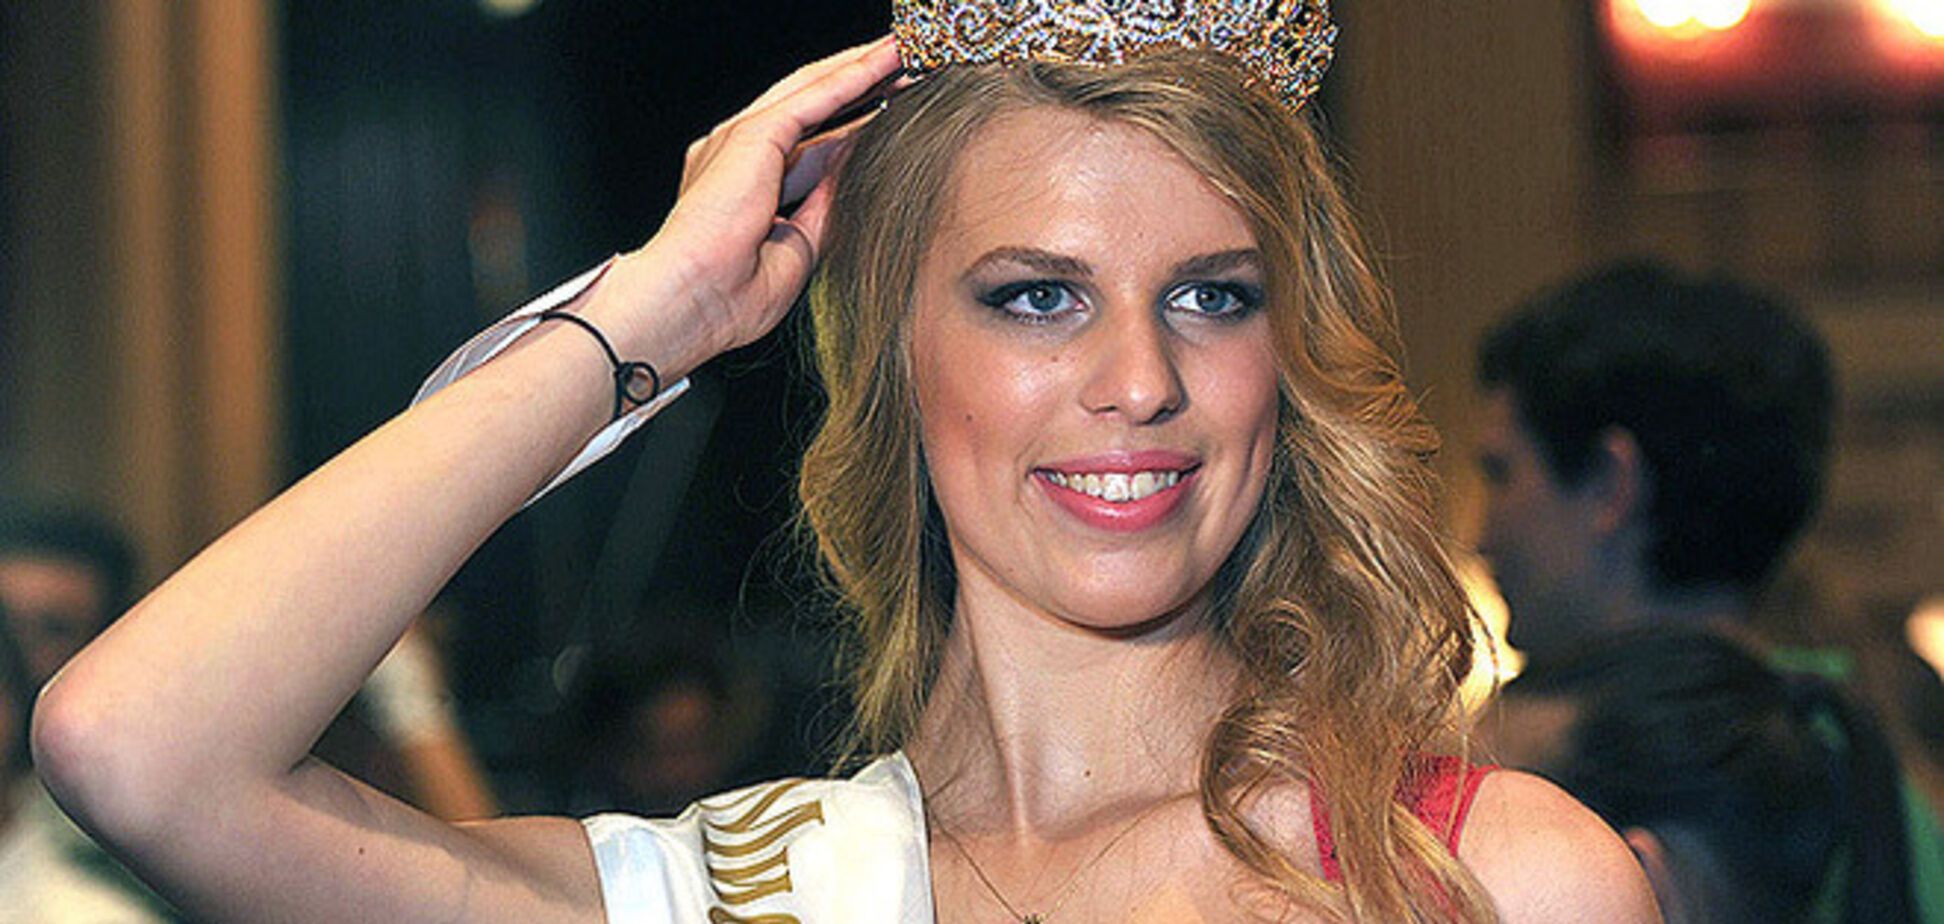 В сети высмеяли решение жюри на конкурсе 'Мисс Москва'